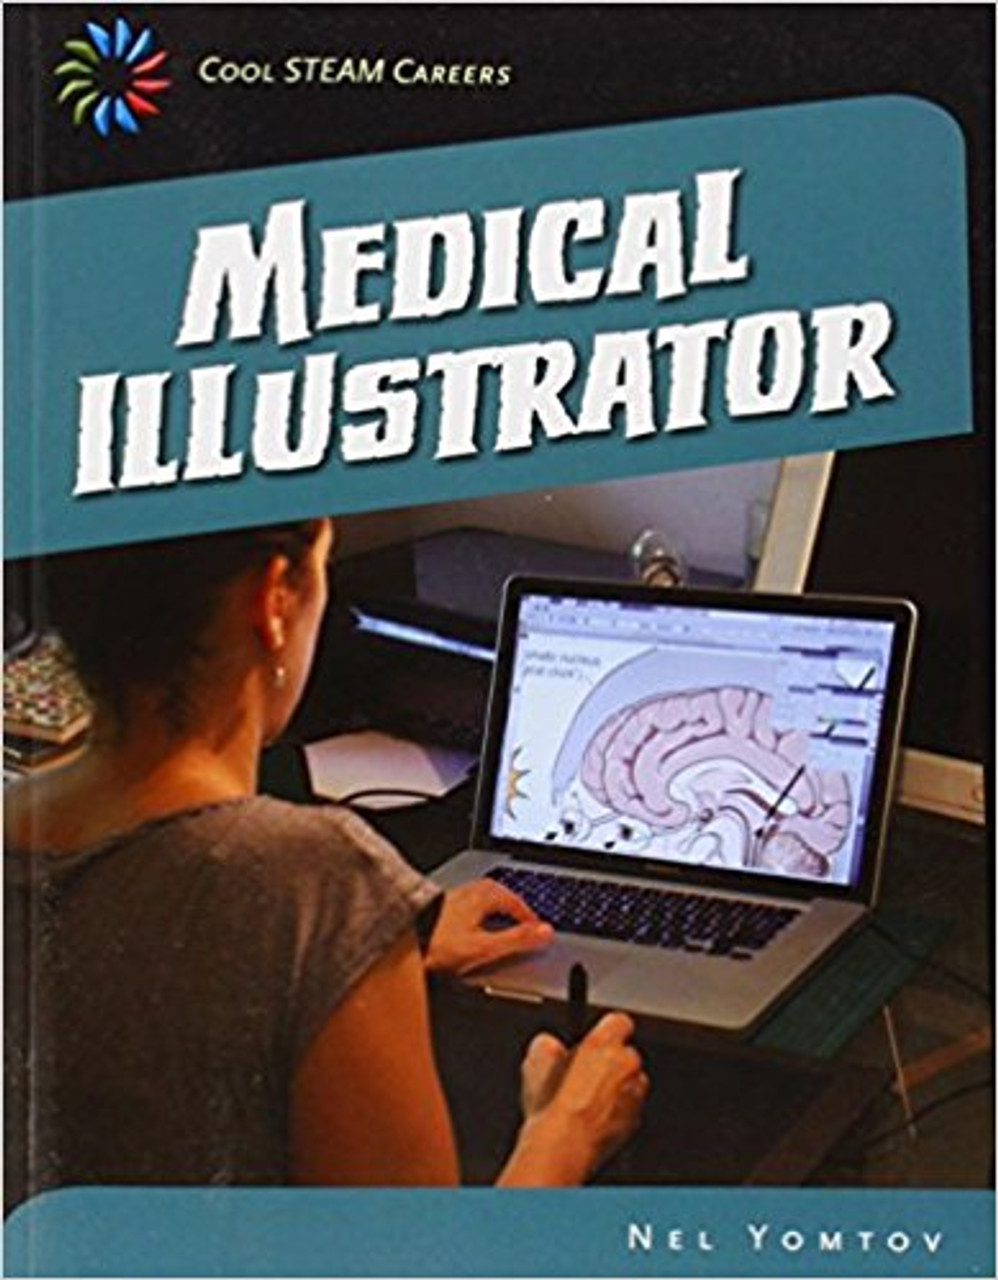 Medical Illustrator by Nel Yomtov